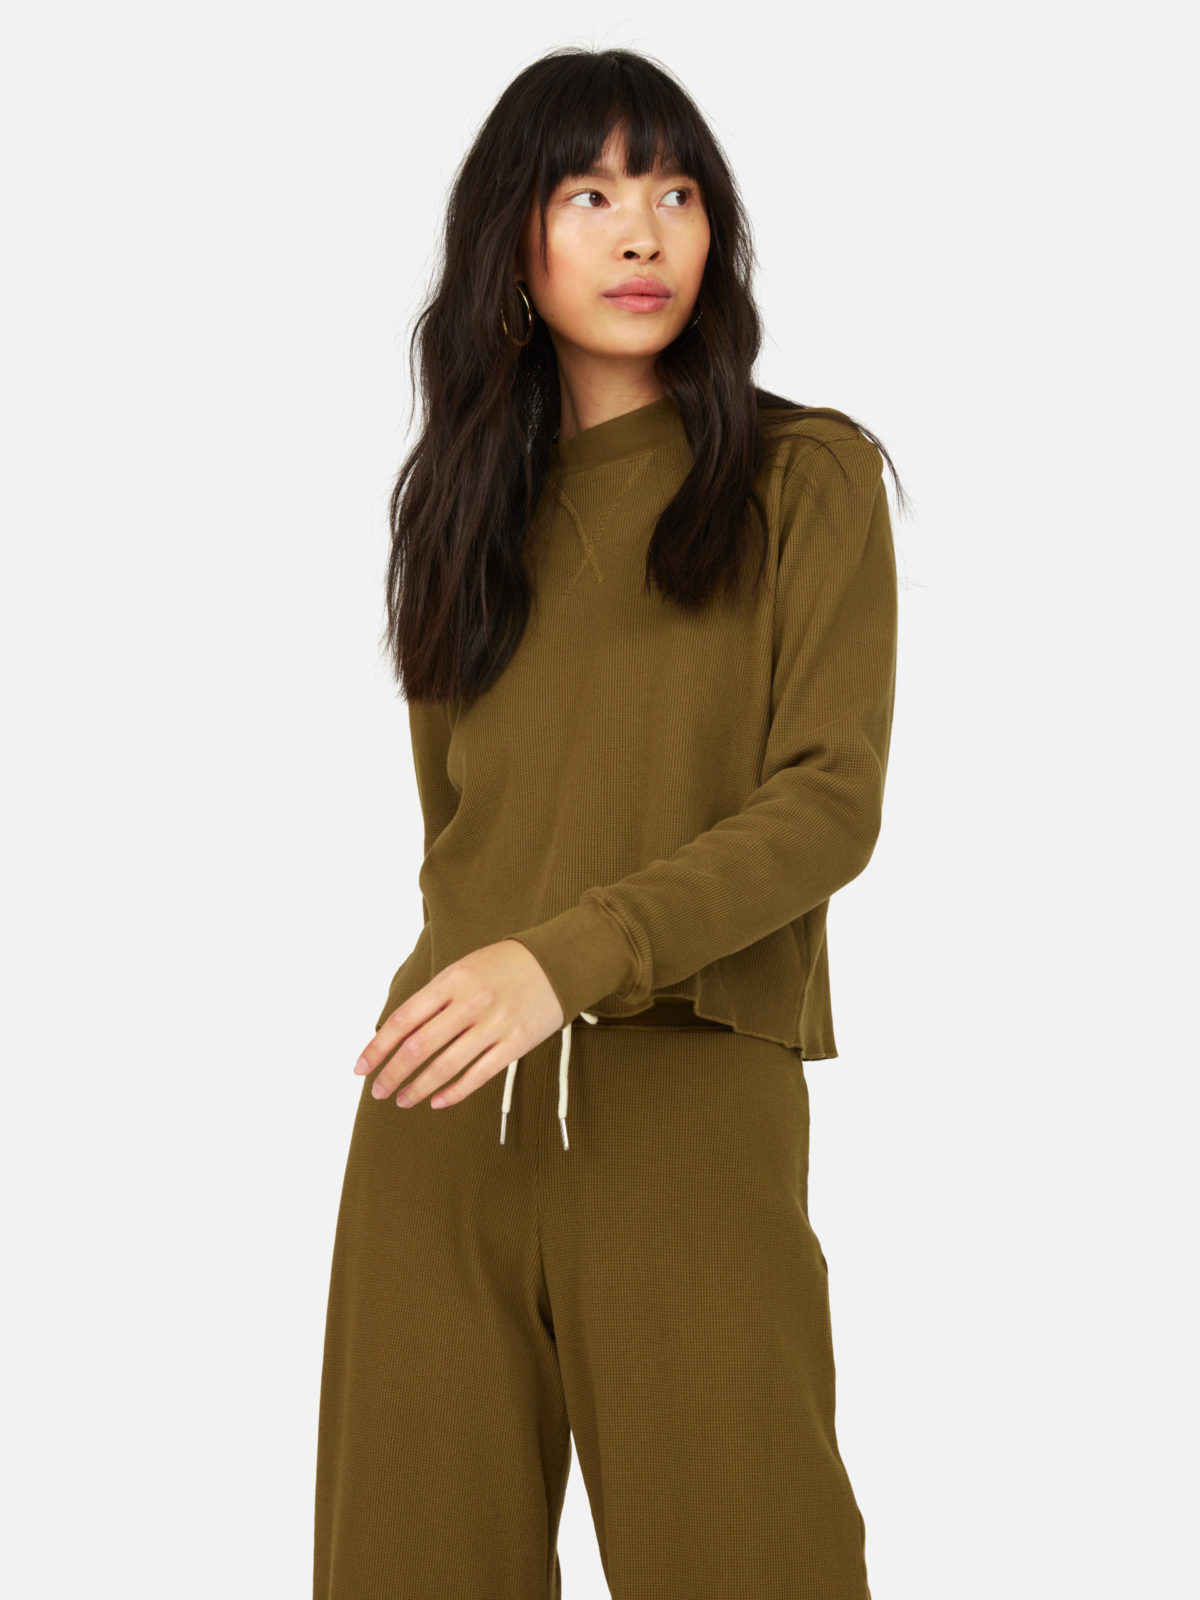 A woman in a green fleece set